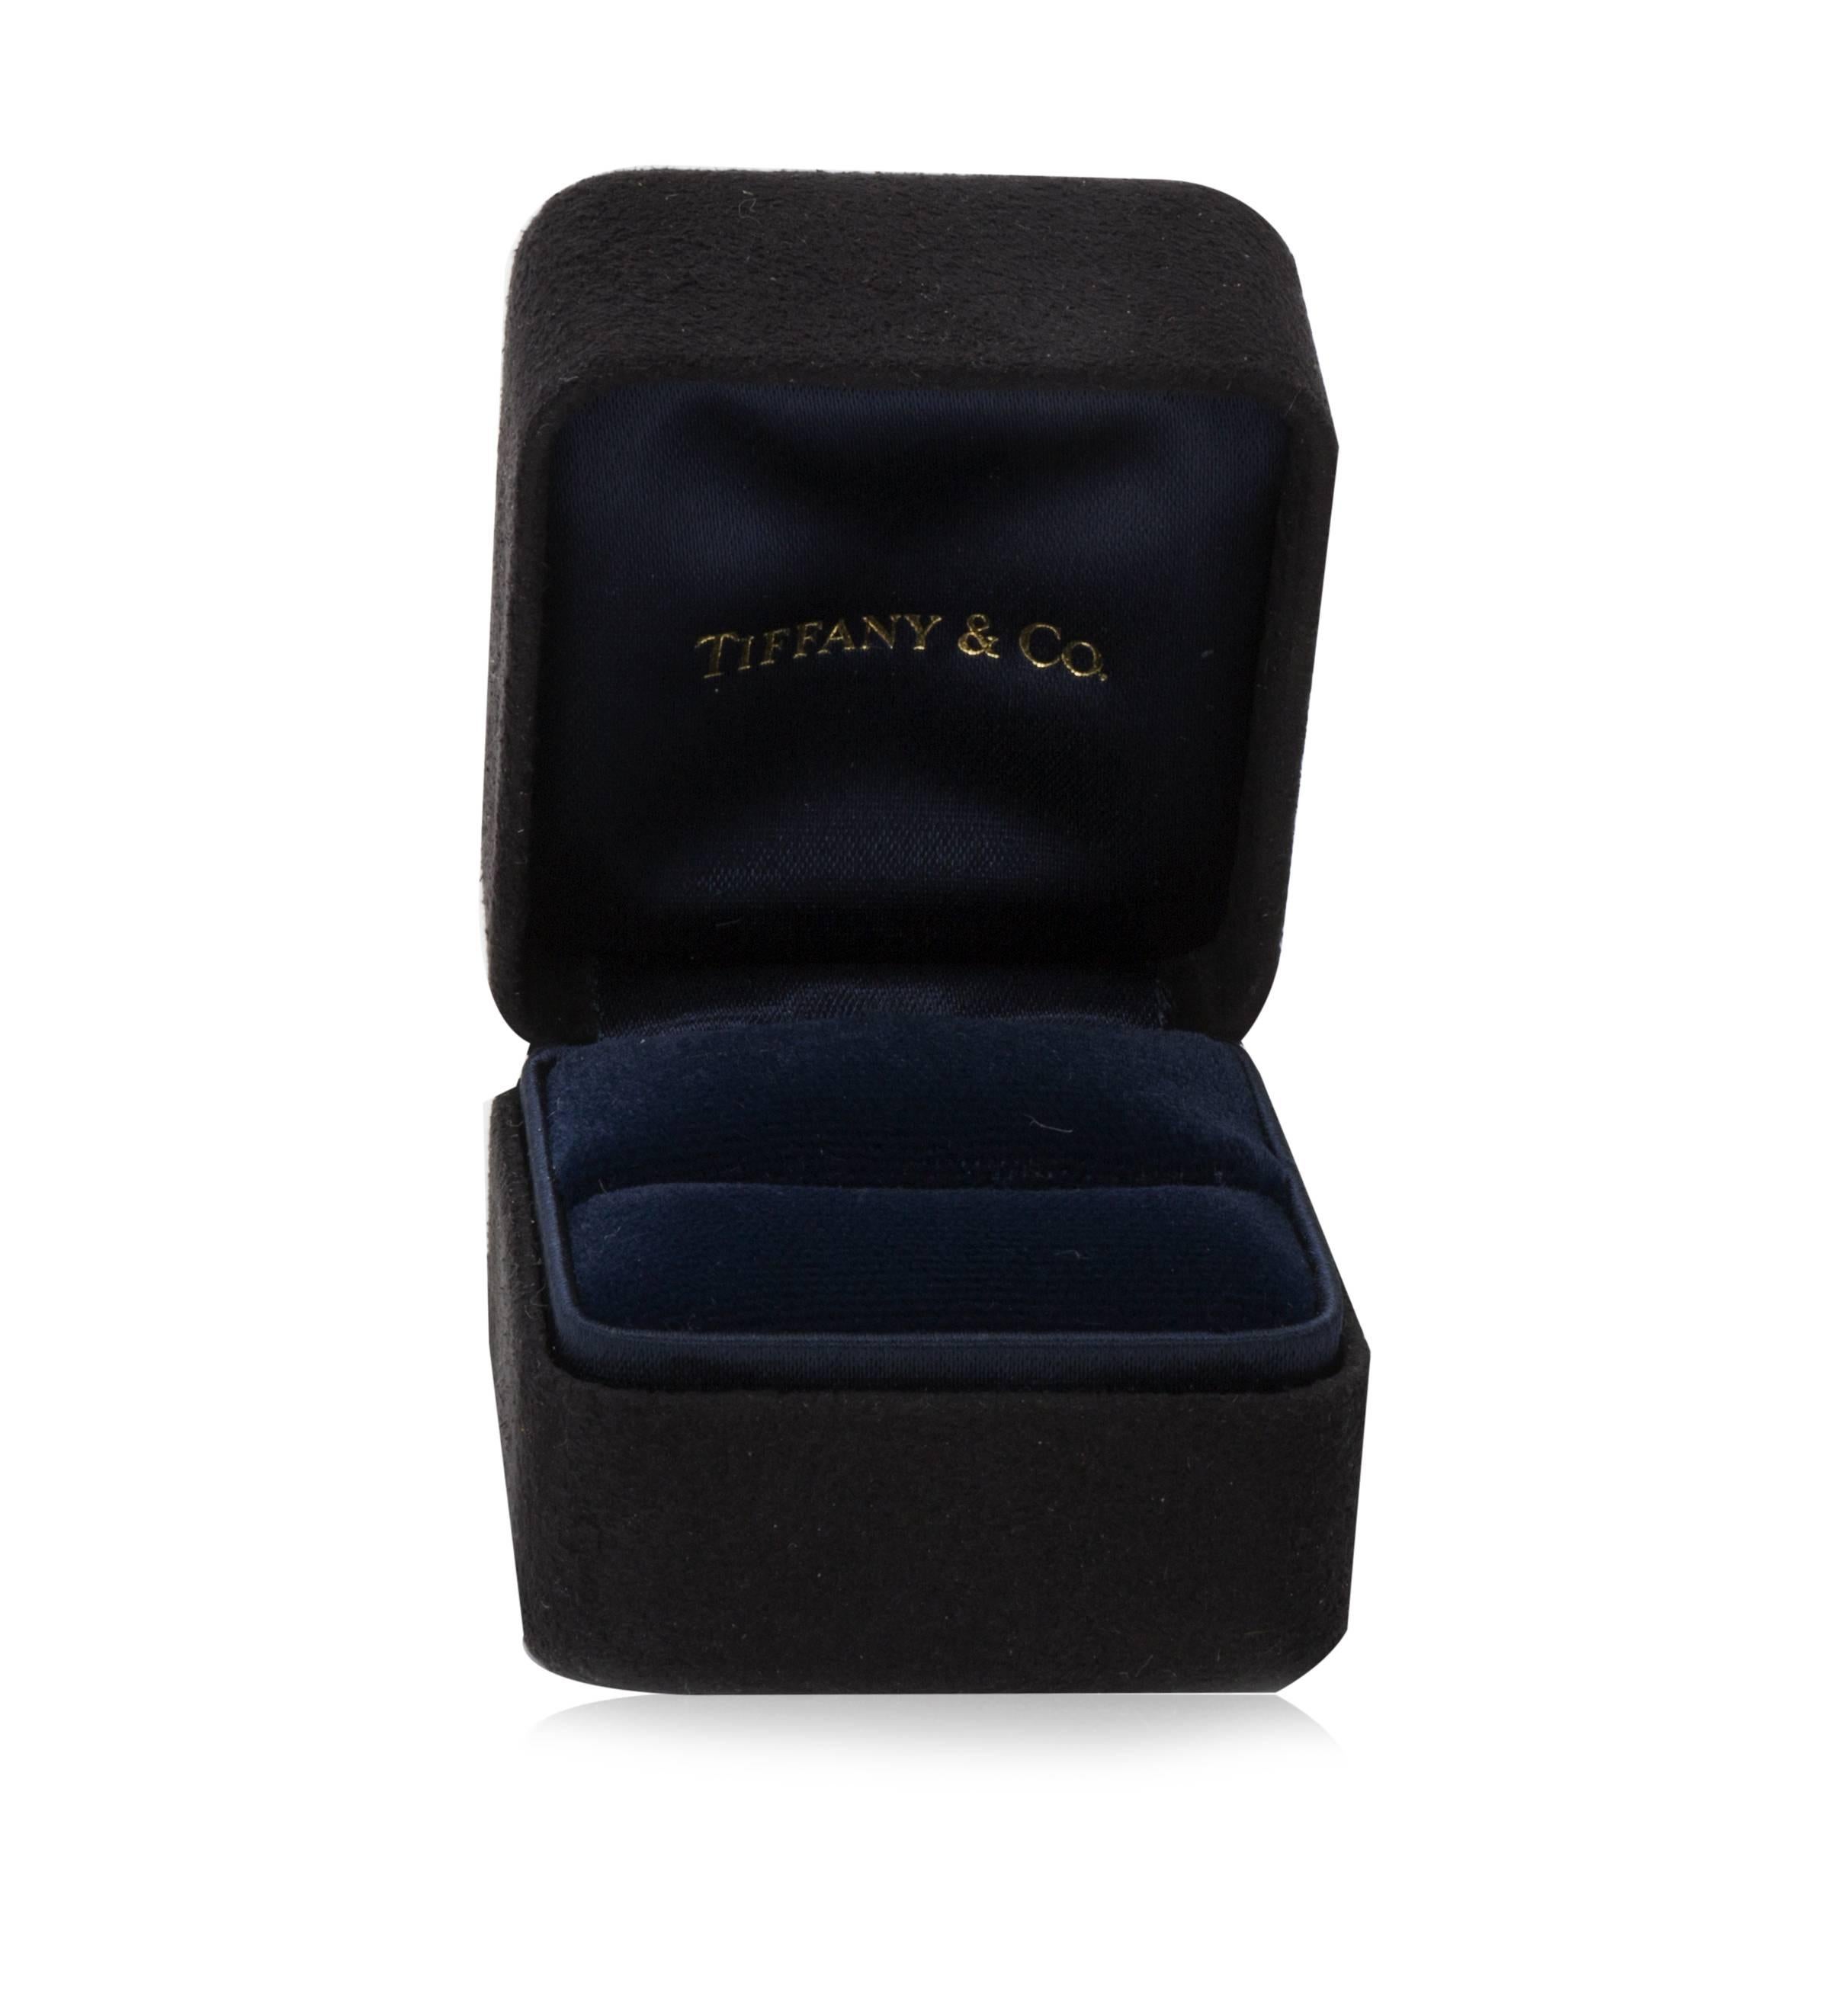 Round Cut Tiffany & Co. Solitaire Diamond Engagement Ring in Platinum 0.82 Carat